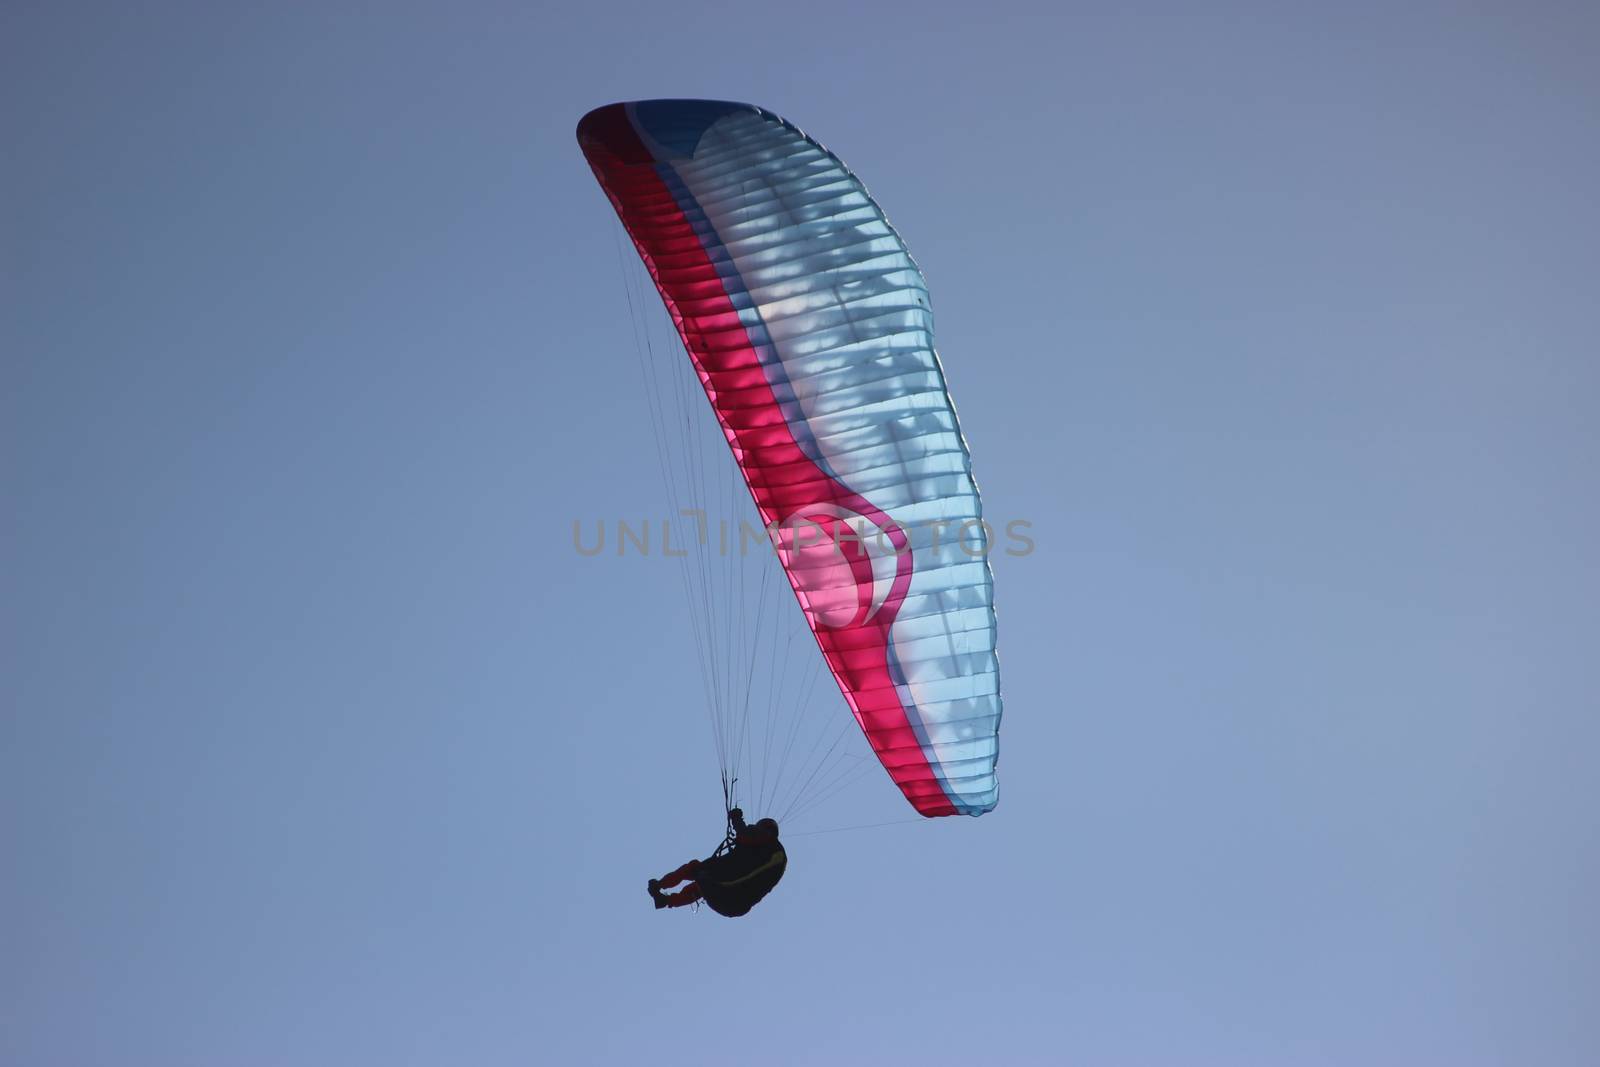 Paraglider on Blue Sky by bensib